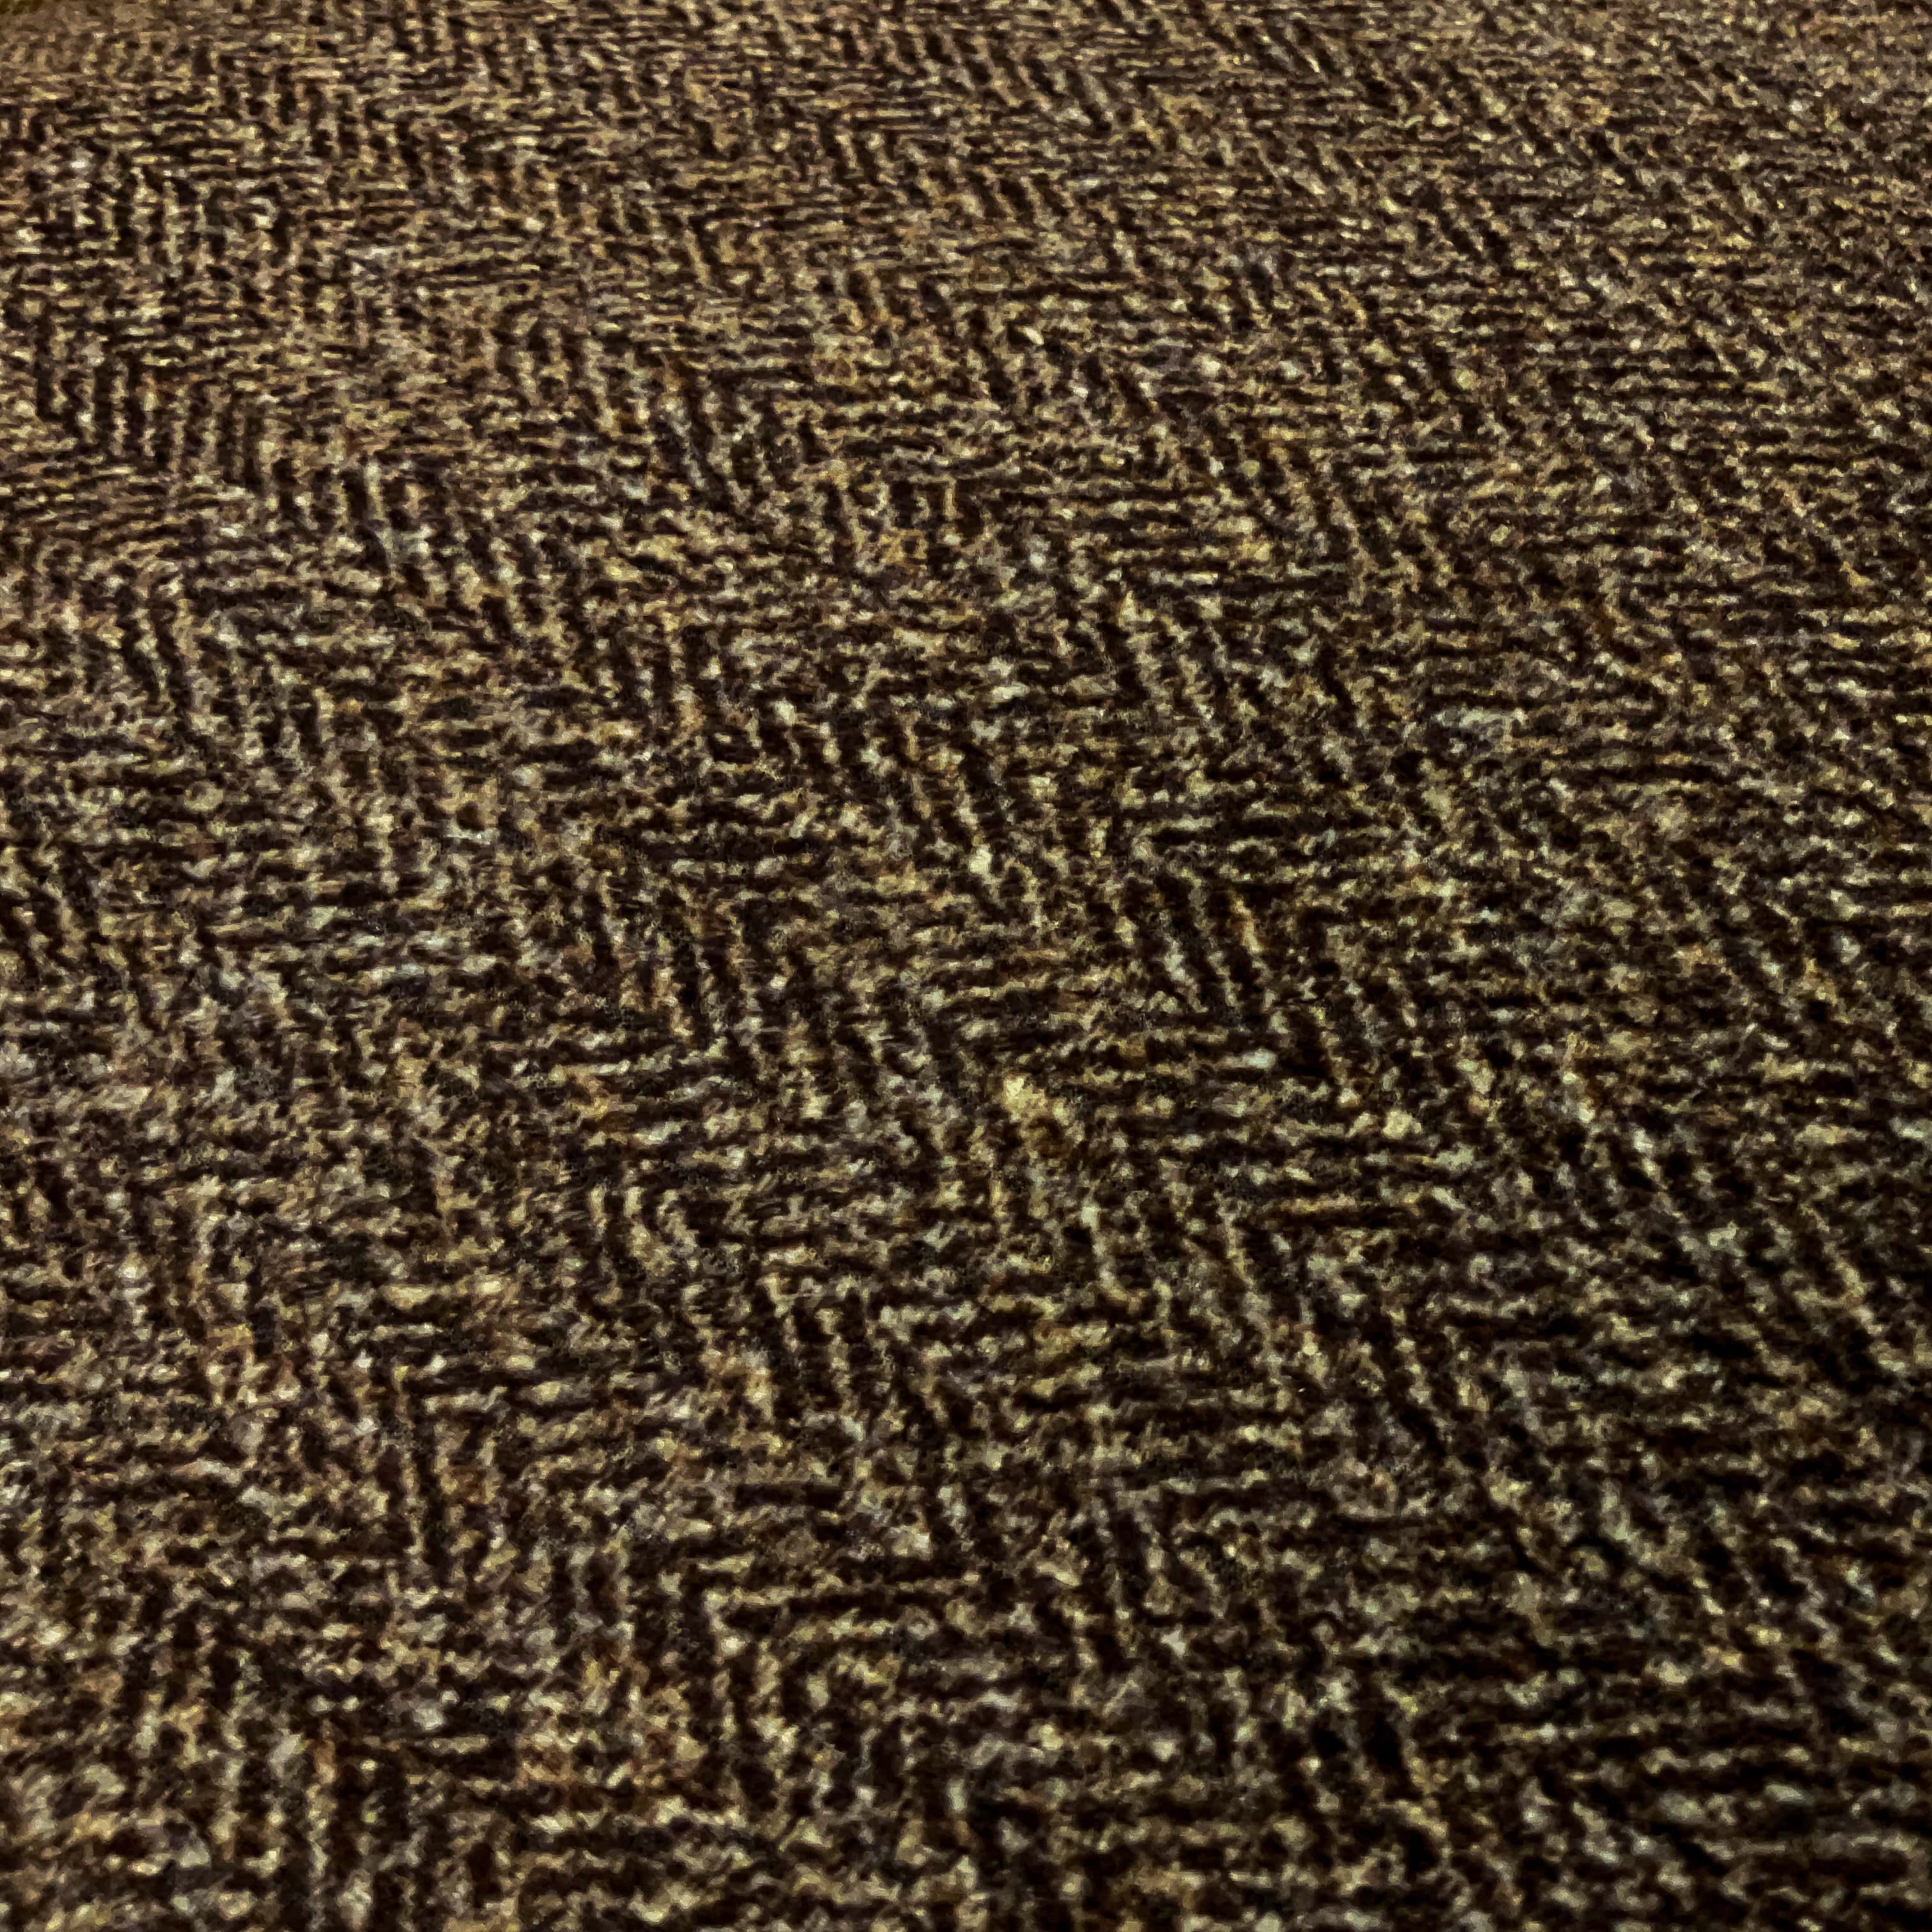 fabric closeup of a plain brown suede cushion showing a geometric pattern